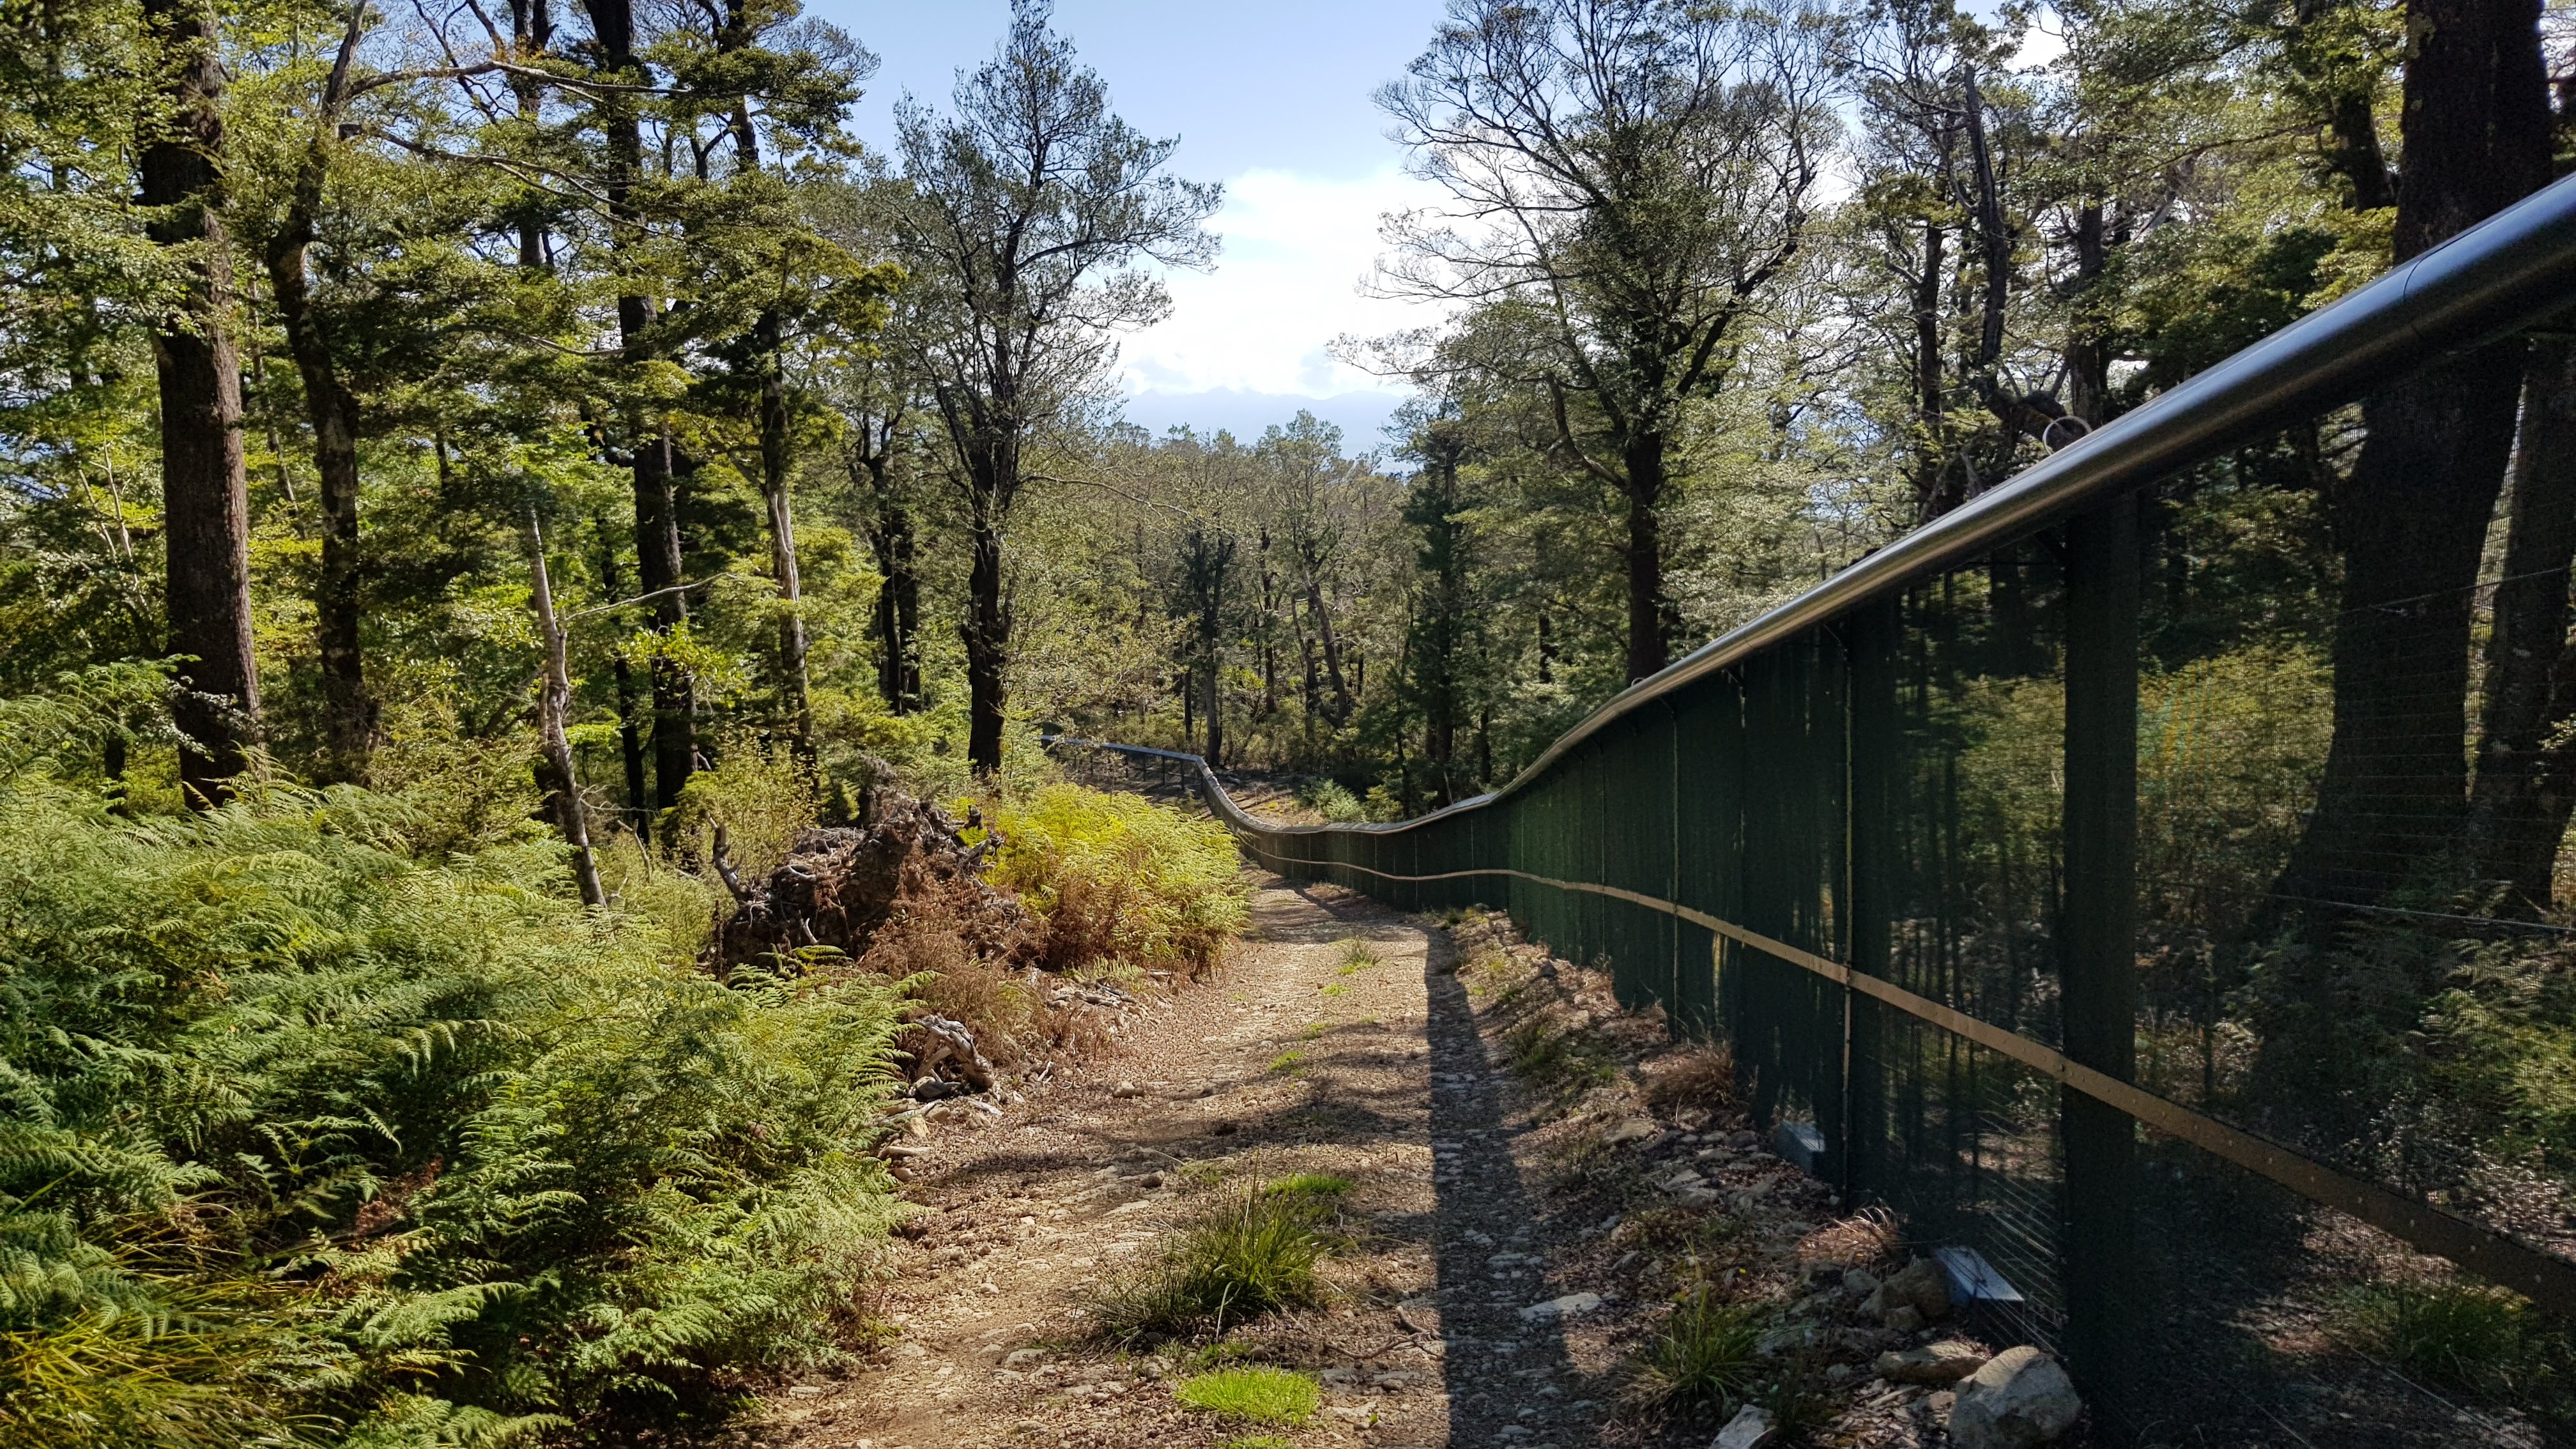 Following the fence line of the Brook Waimarama Sanctuary